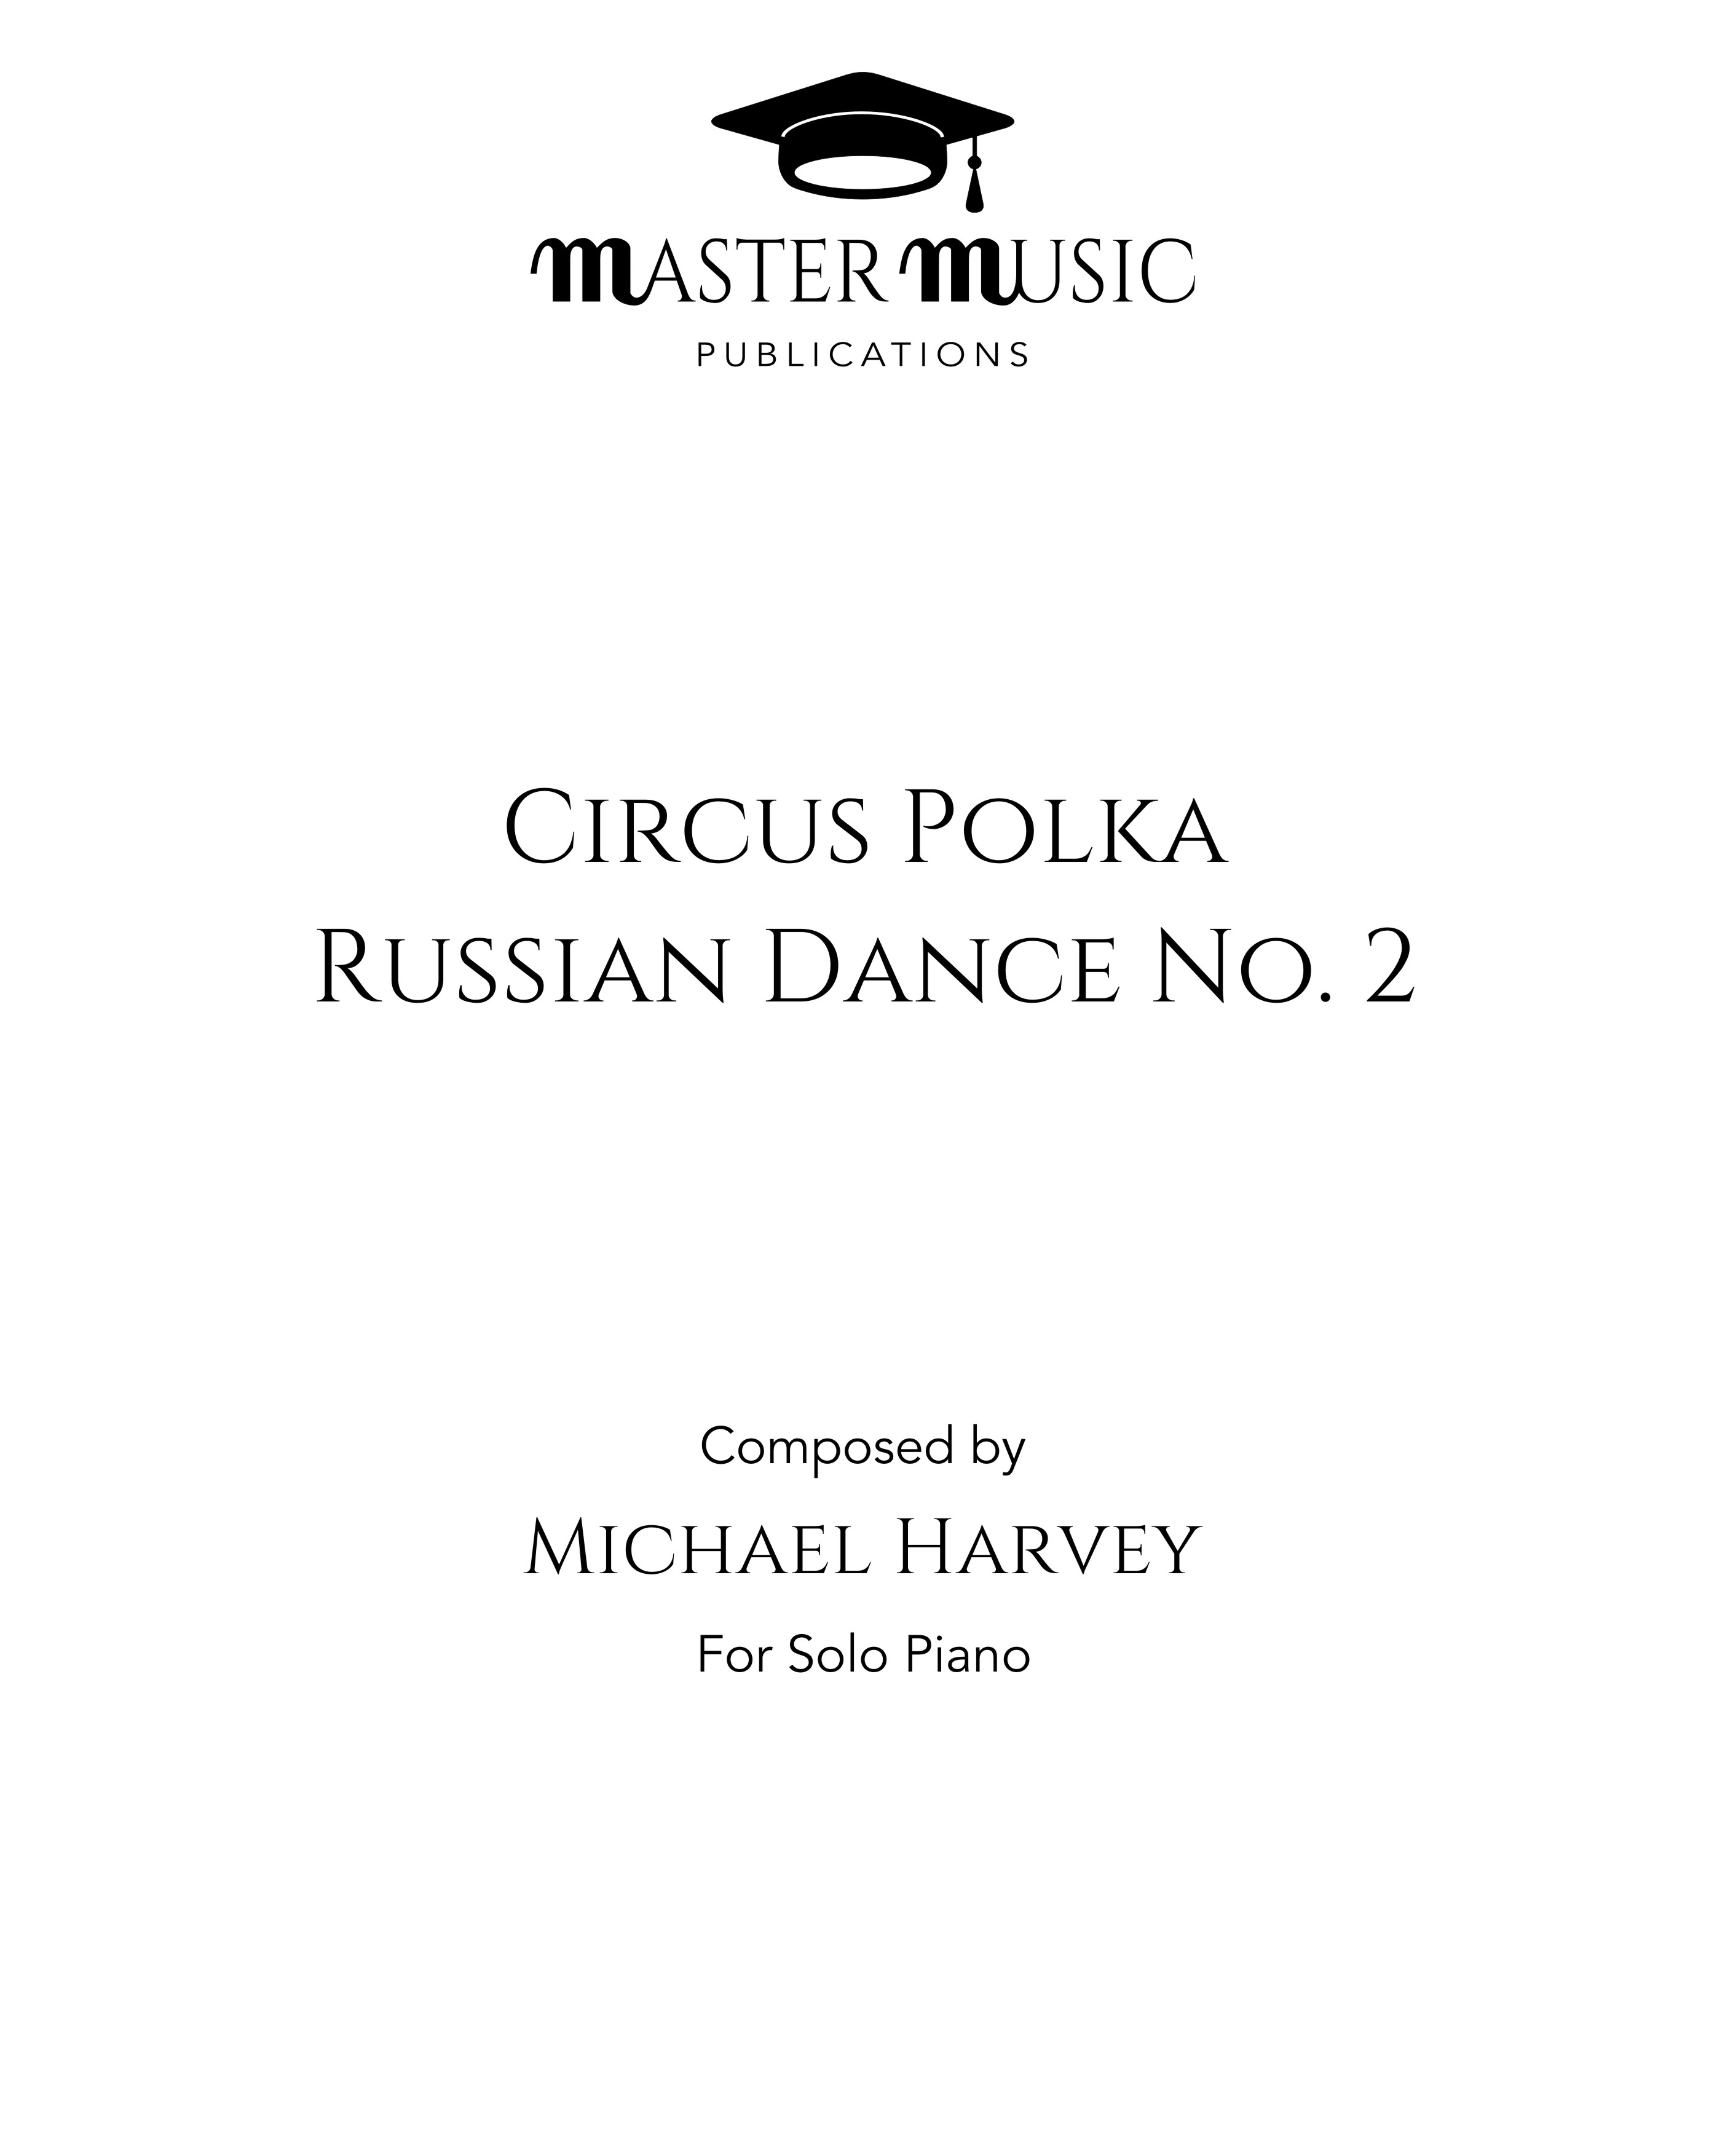 Circus Polka (Russian Dance No. 2)